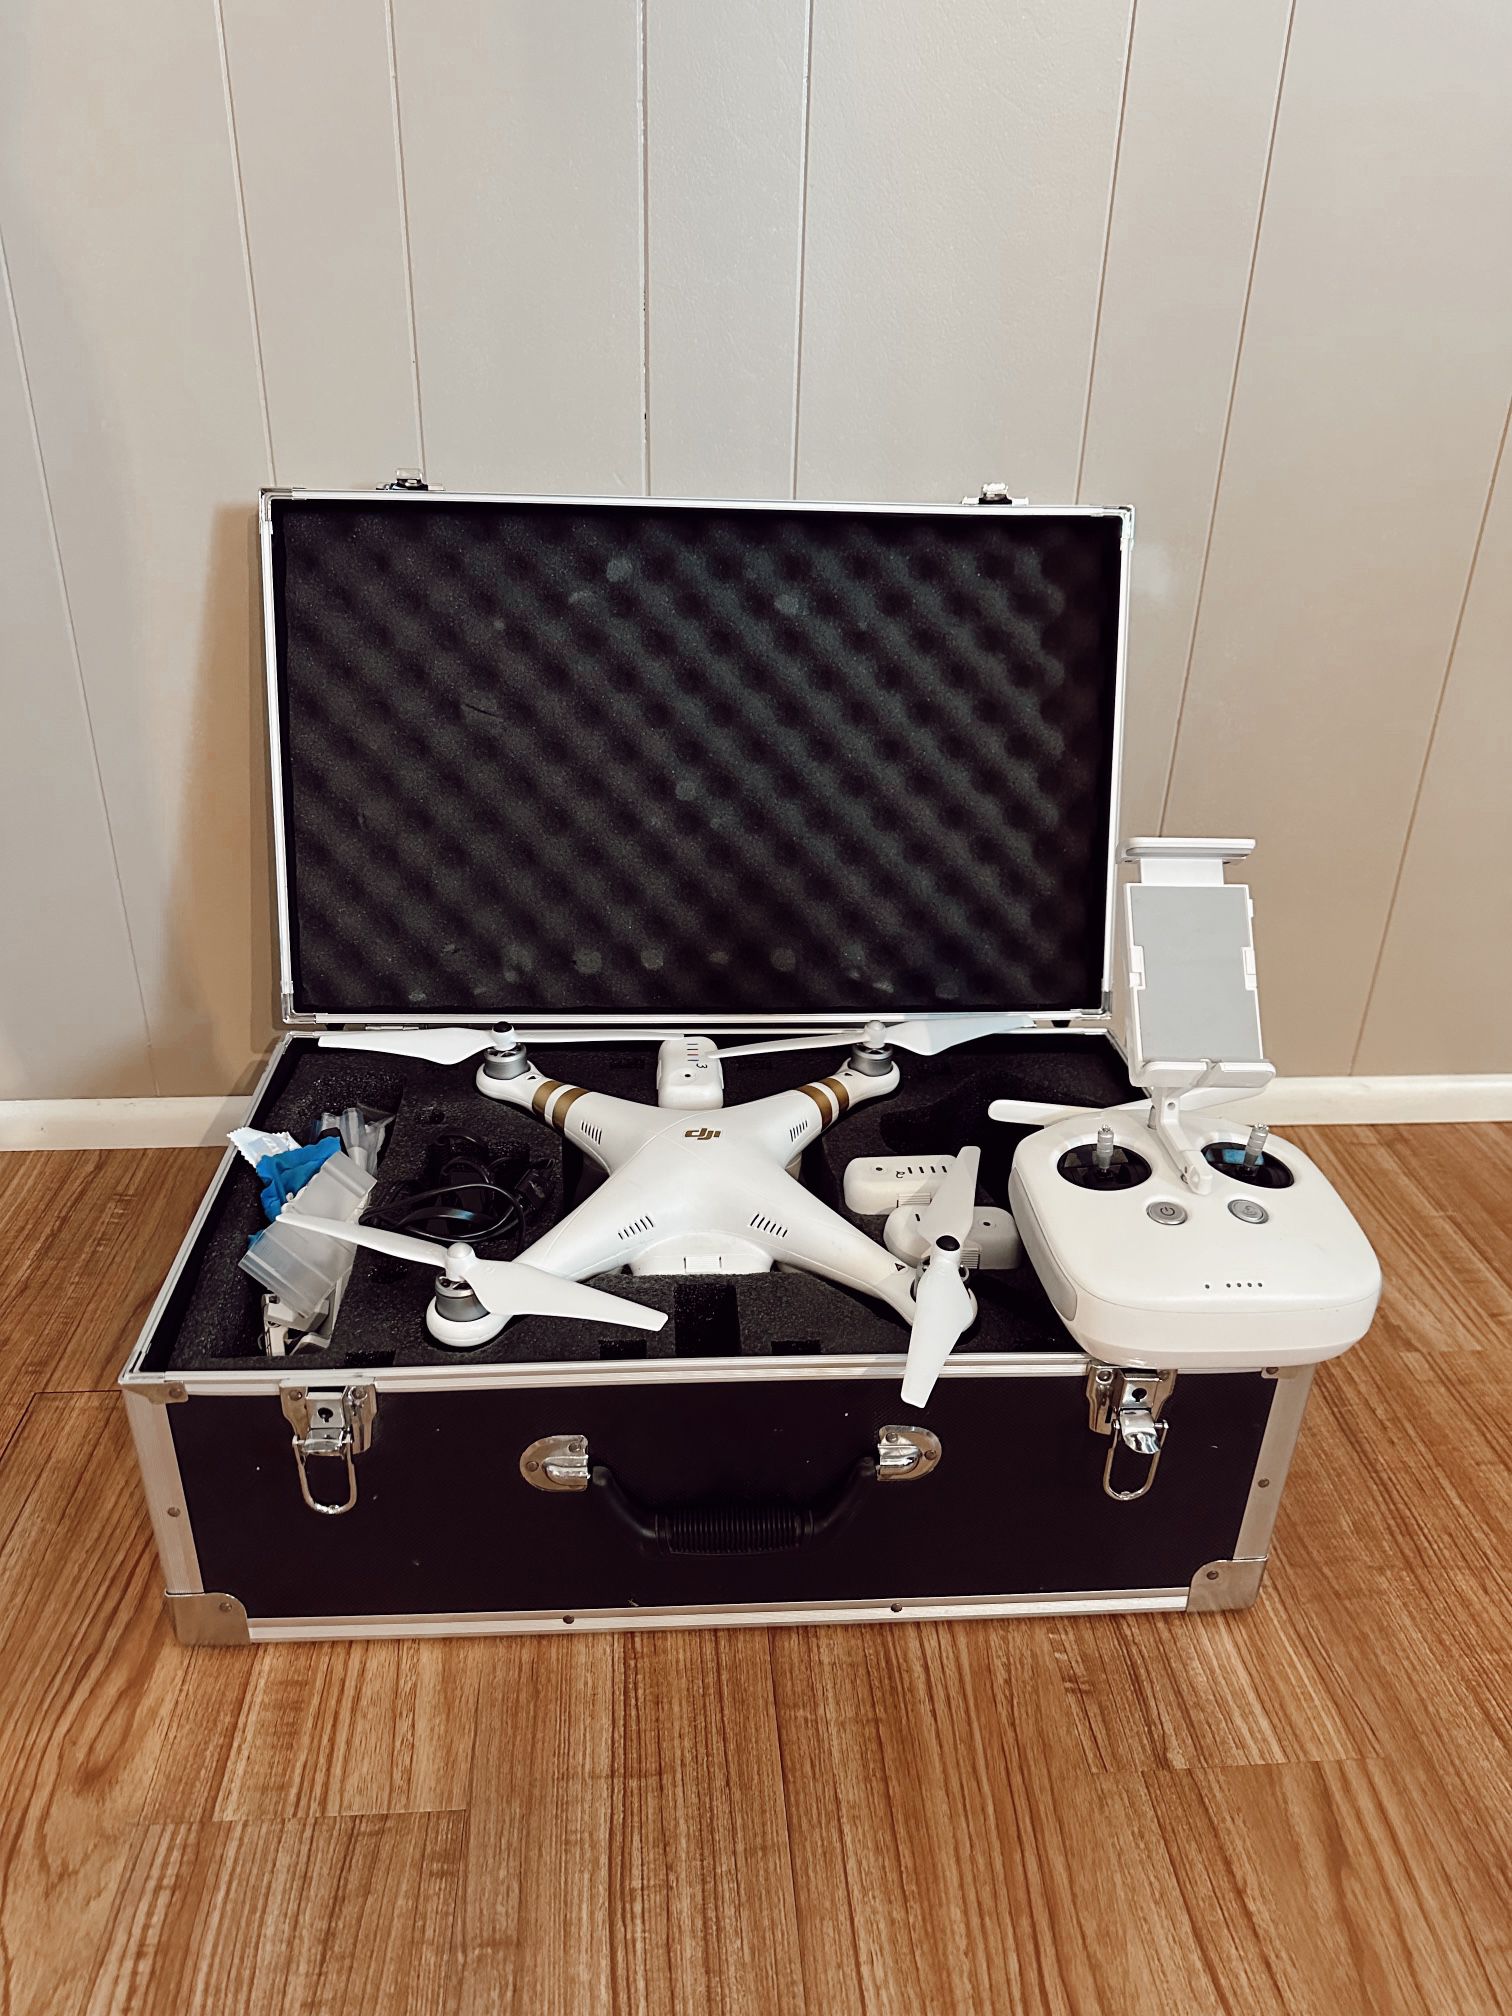 Brand new DJI camera drone 